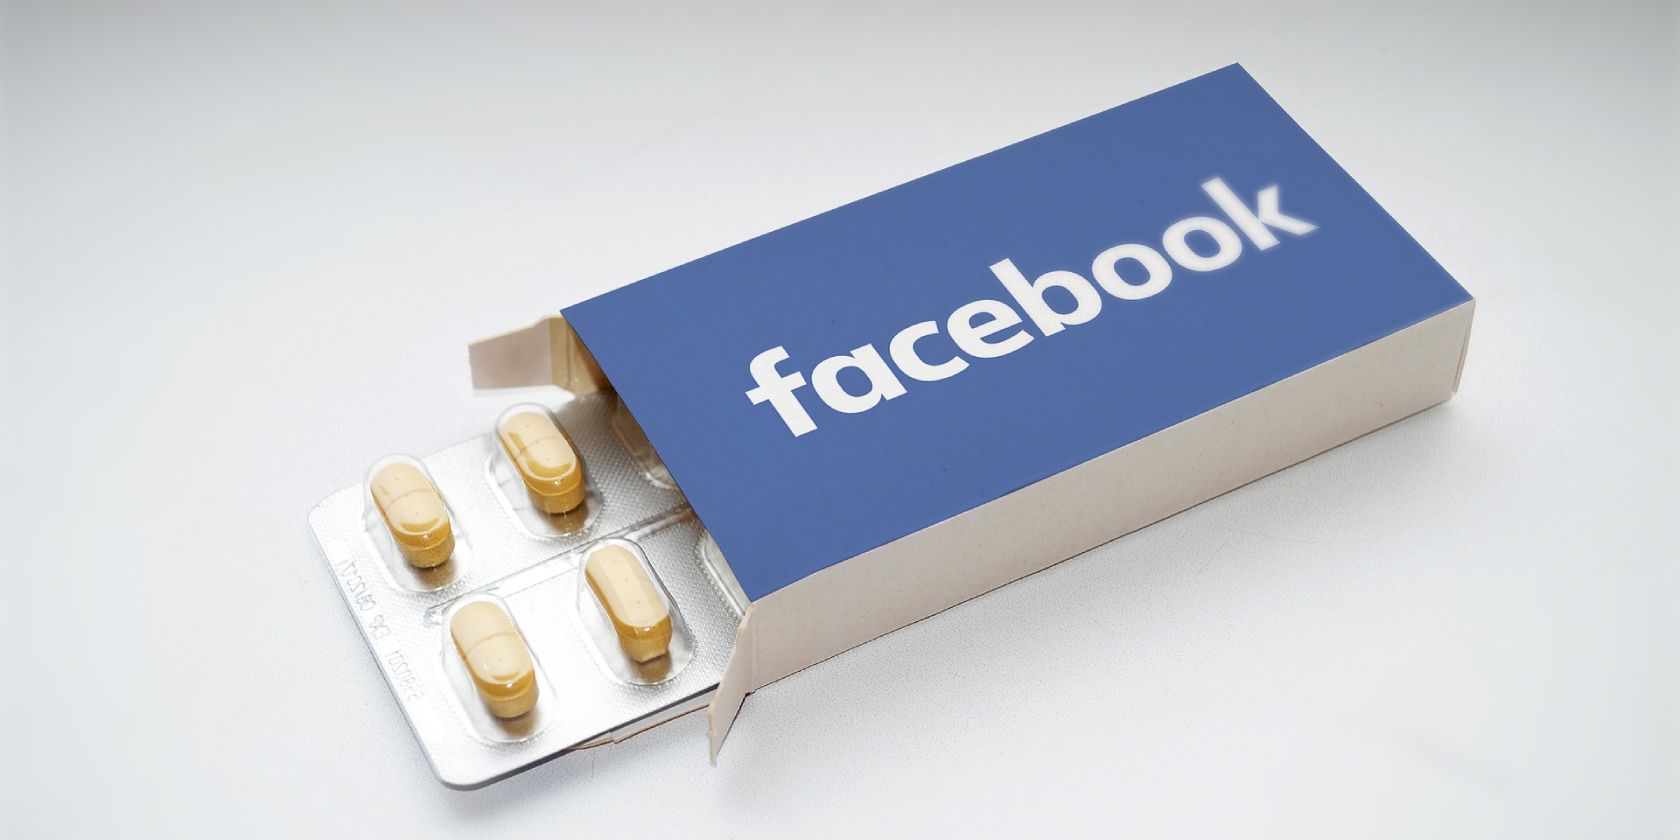 Facebook Pills Depicting Social Media Addiction